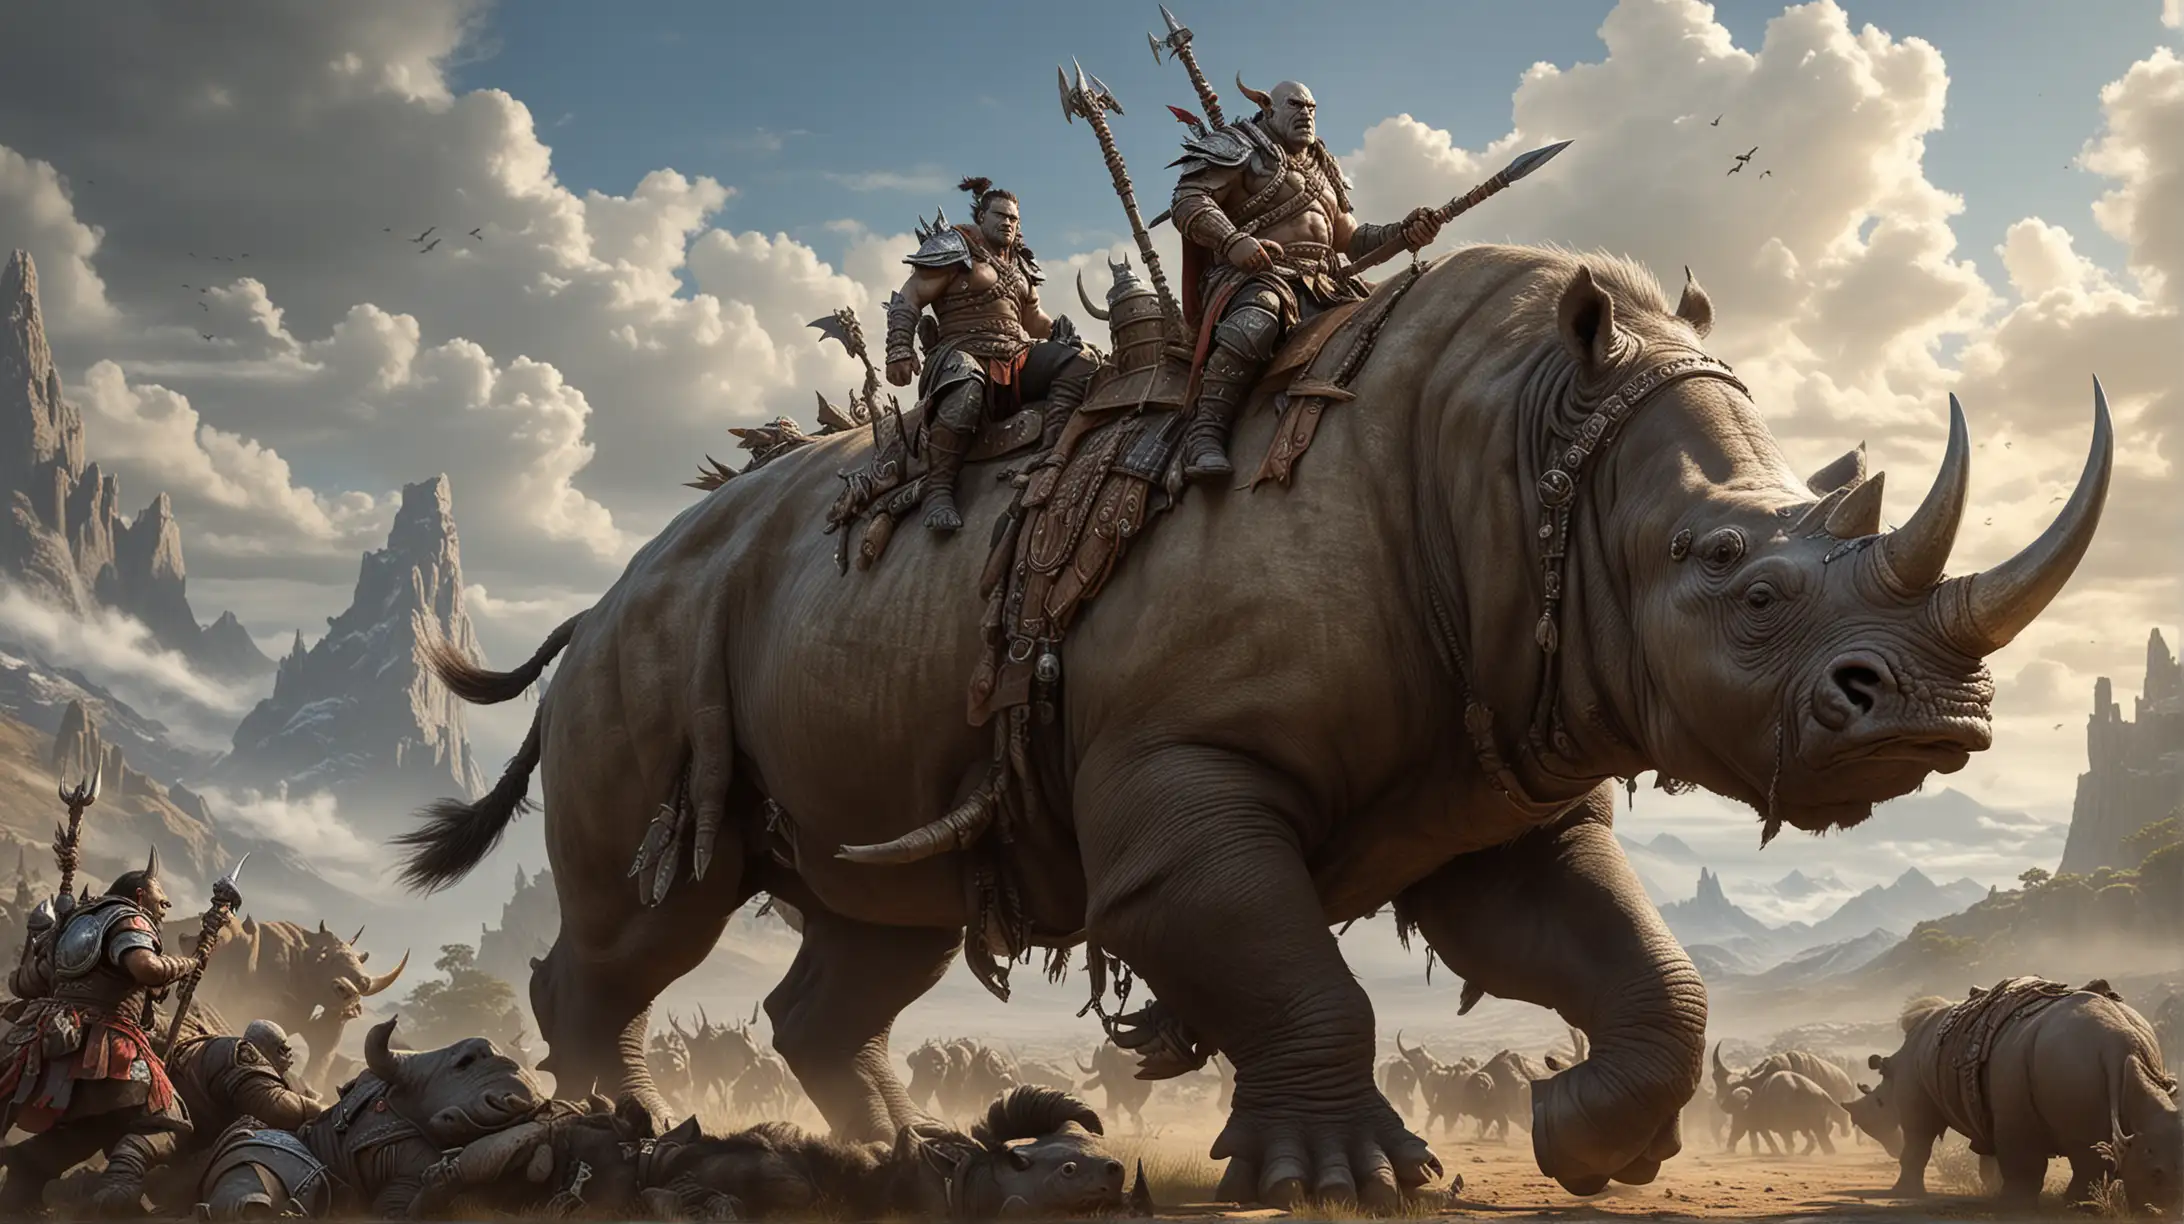 Mighty Orc War Leader Riding a Ferocious Boar in High Fantasy Landscape